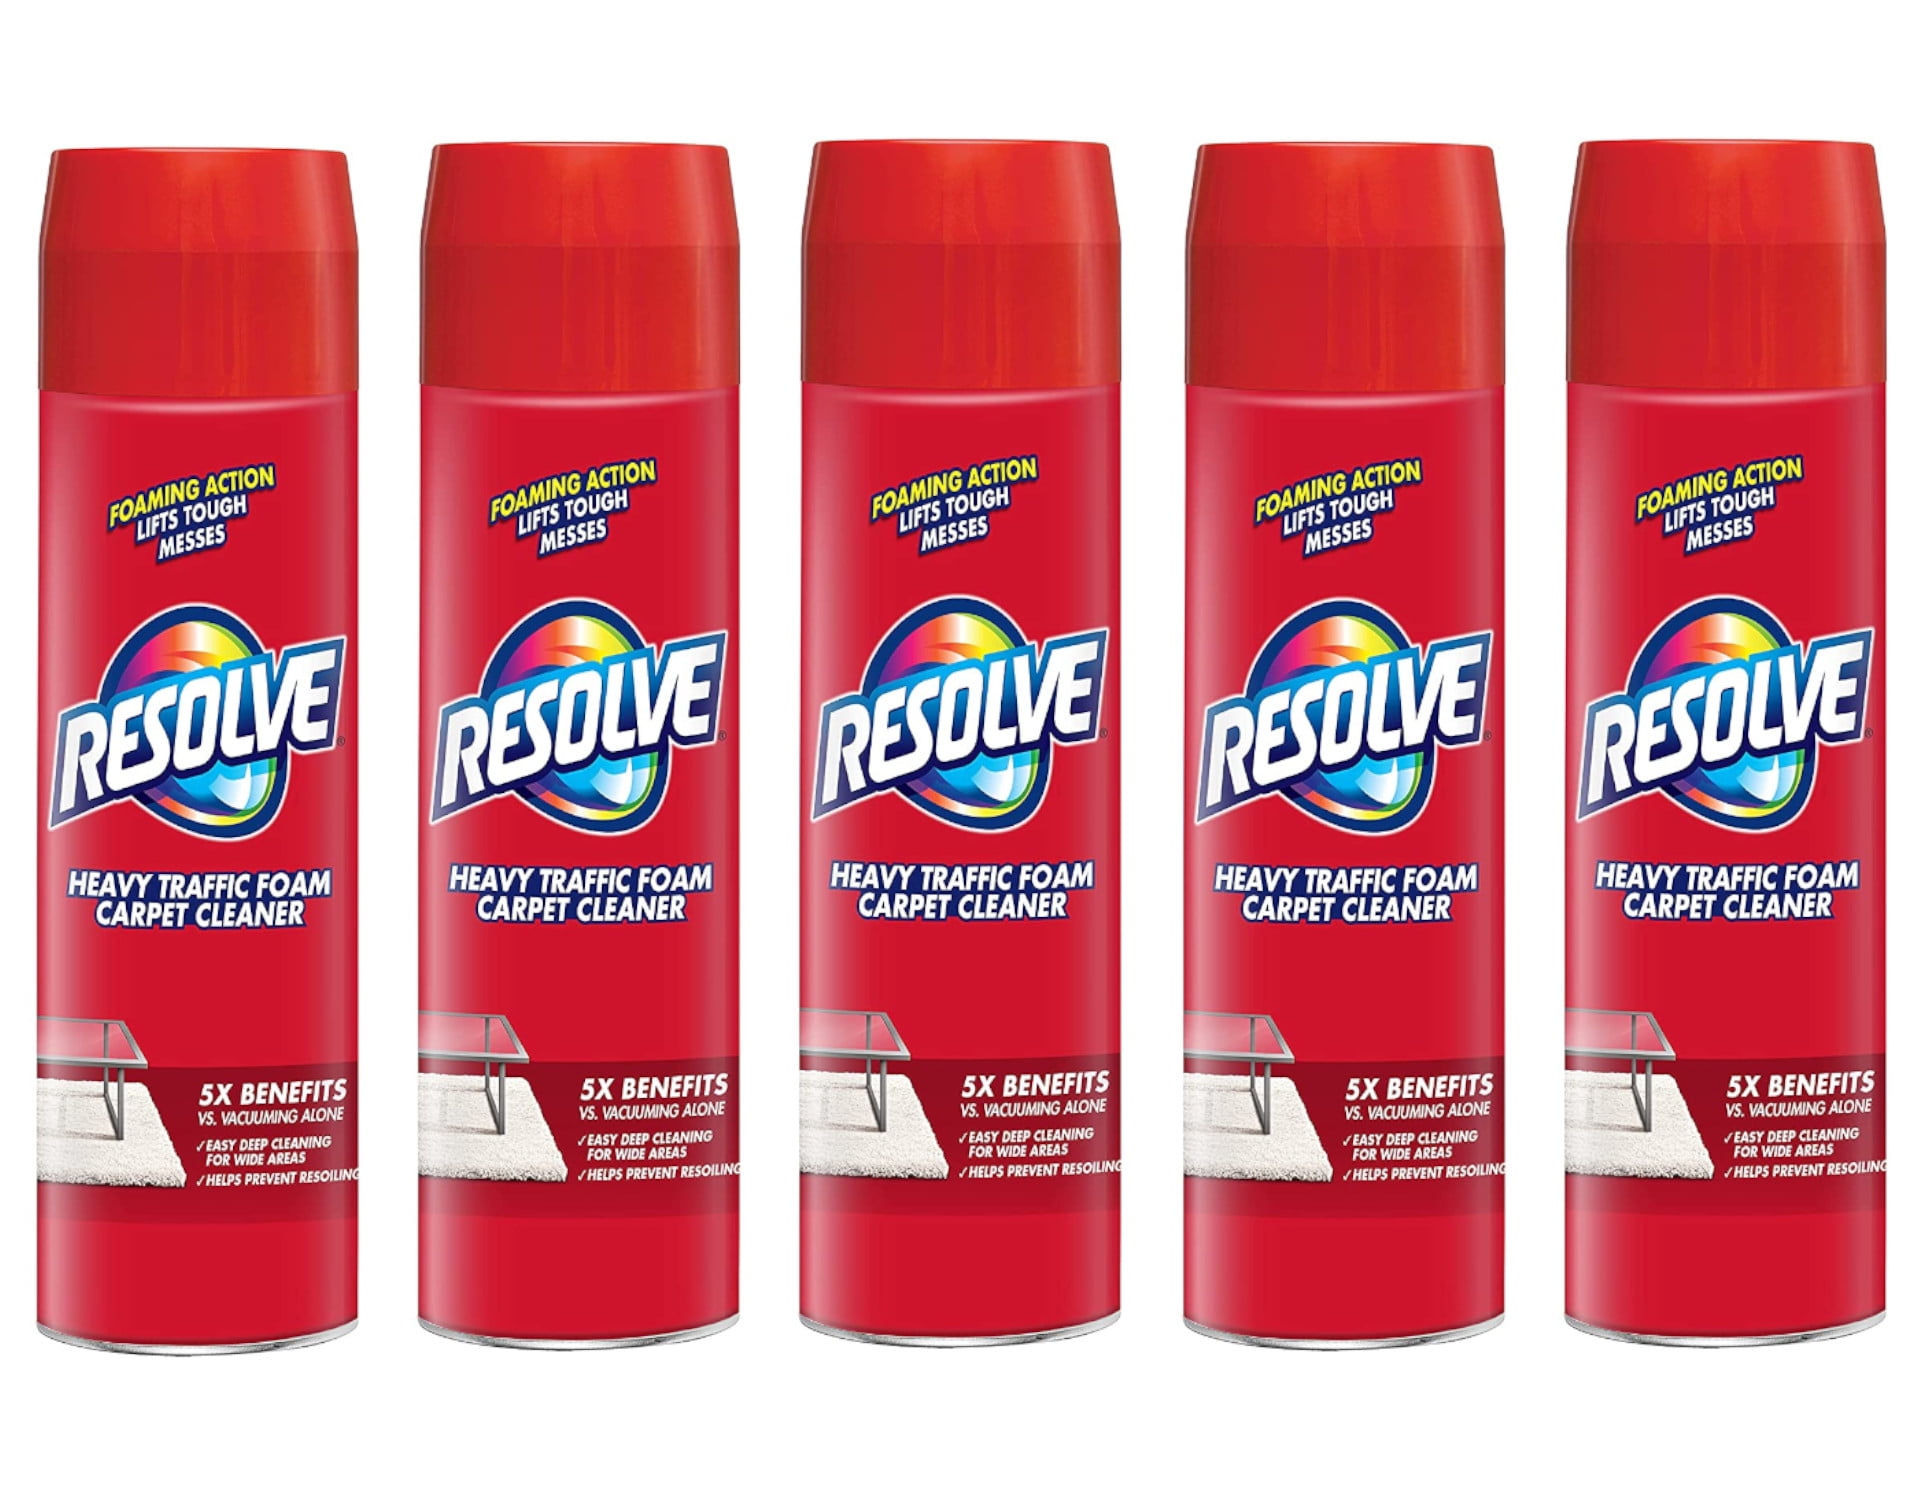 Resolve Heavy Traffic Foam Carpet Cleaner Spray, 22oz. - Pack of 5 